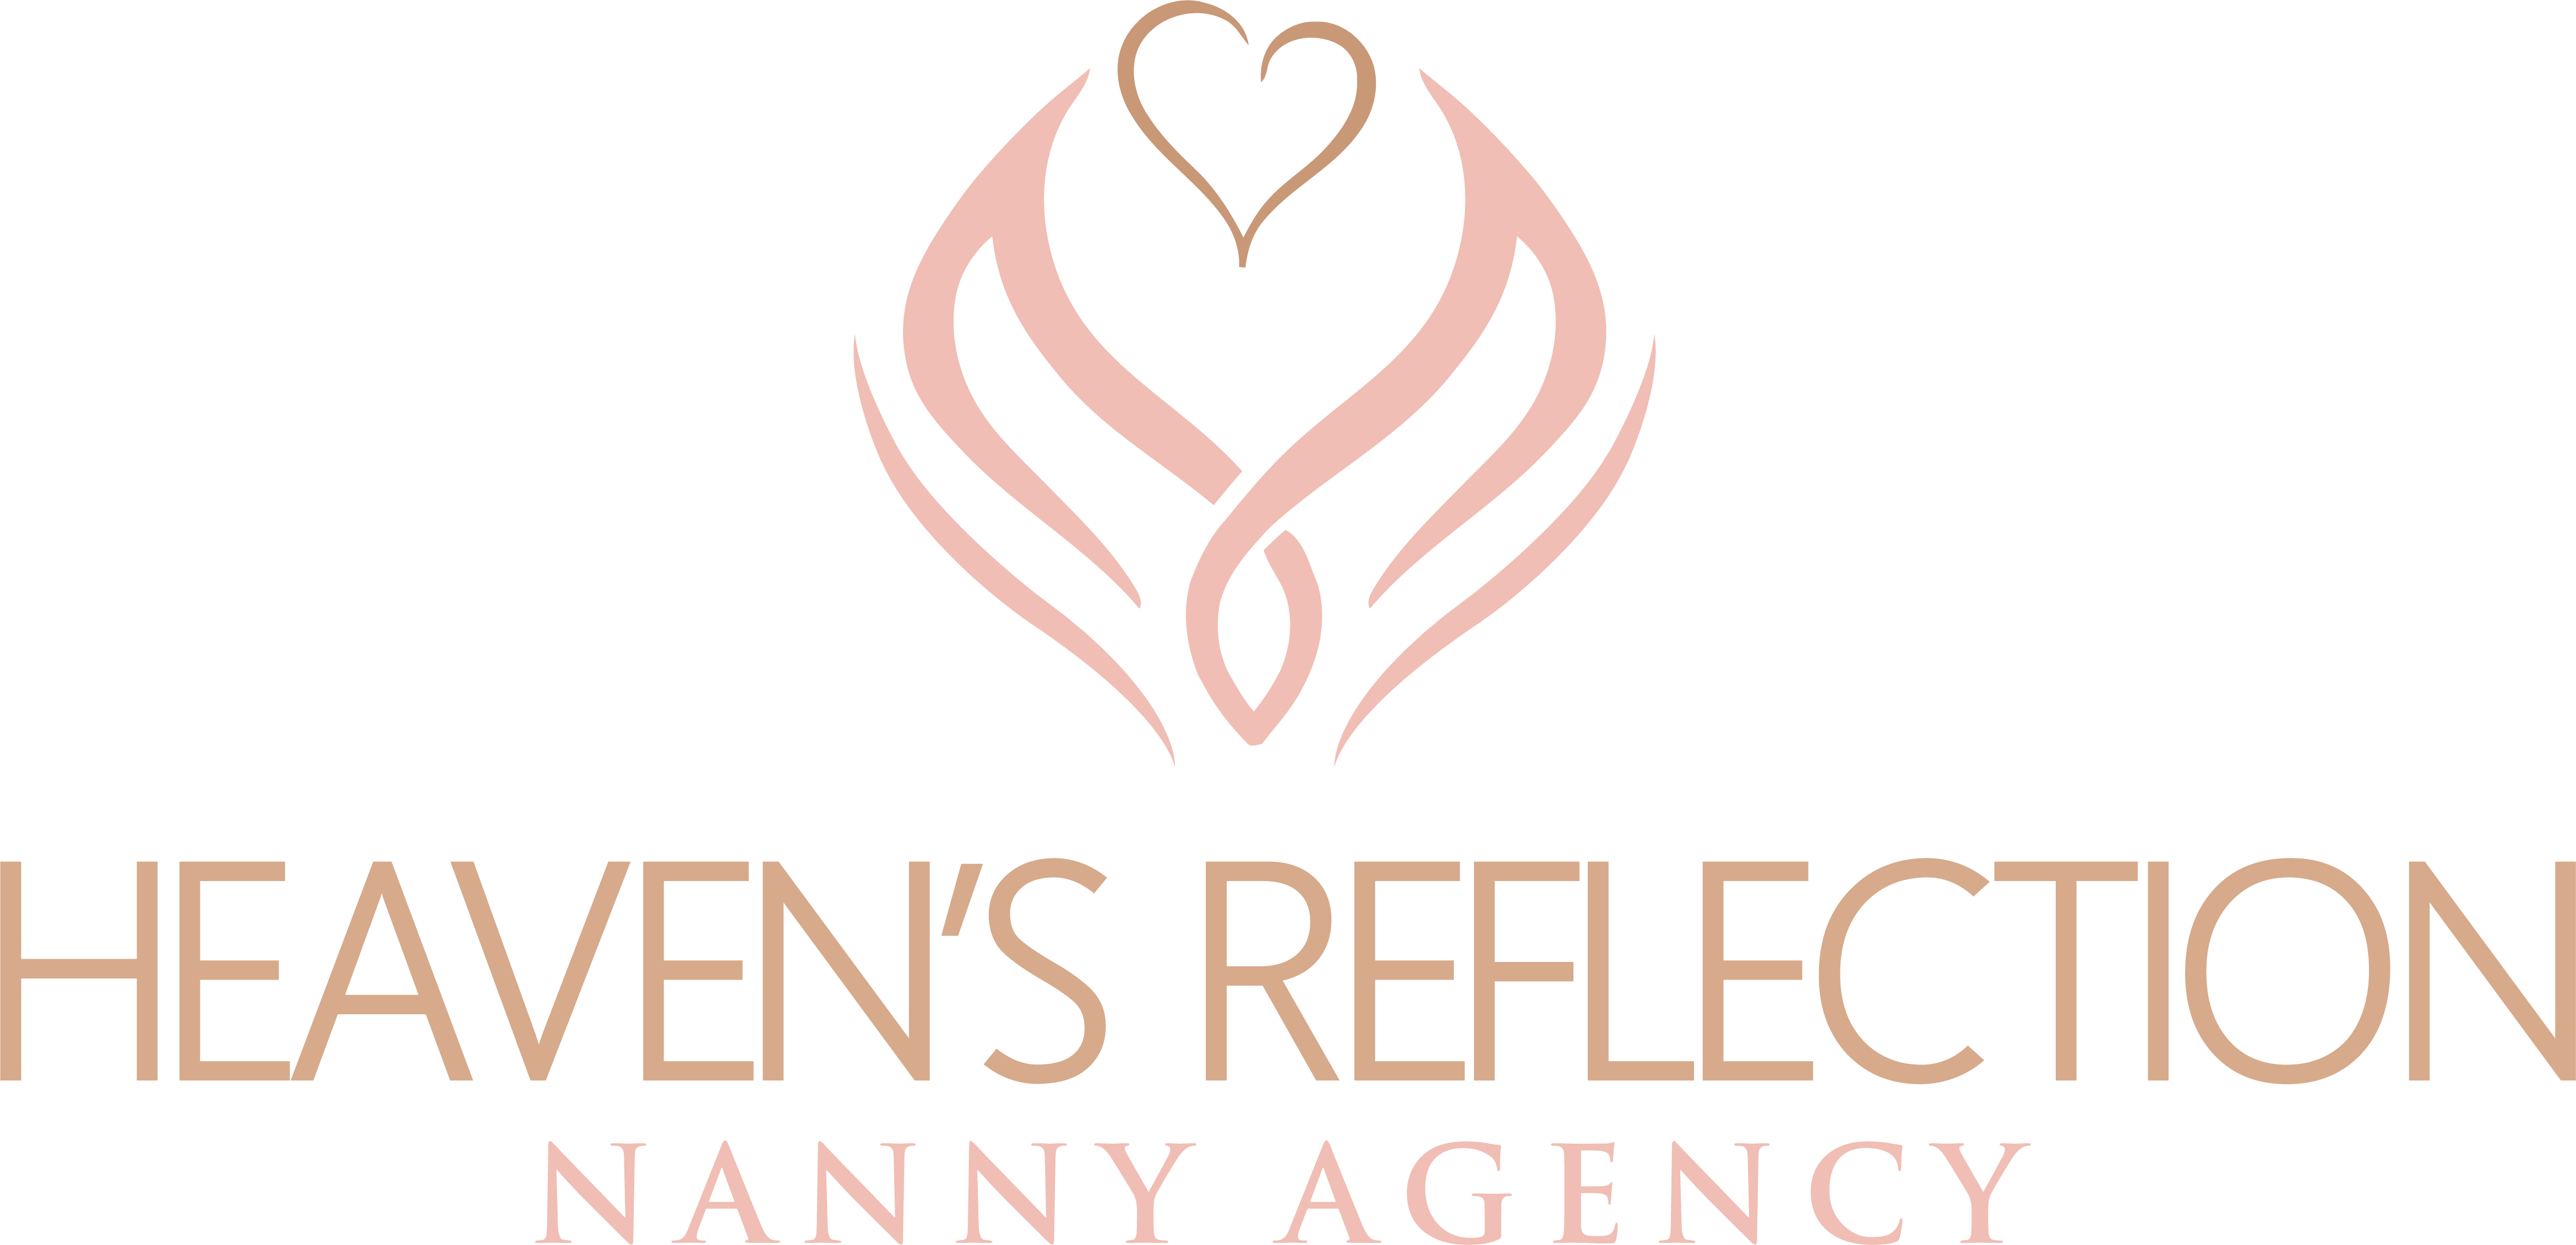 Heaven’s Reflection Nanny Agency Families!